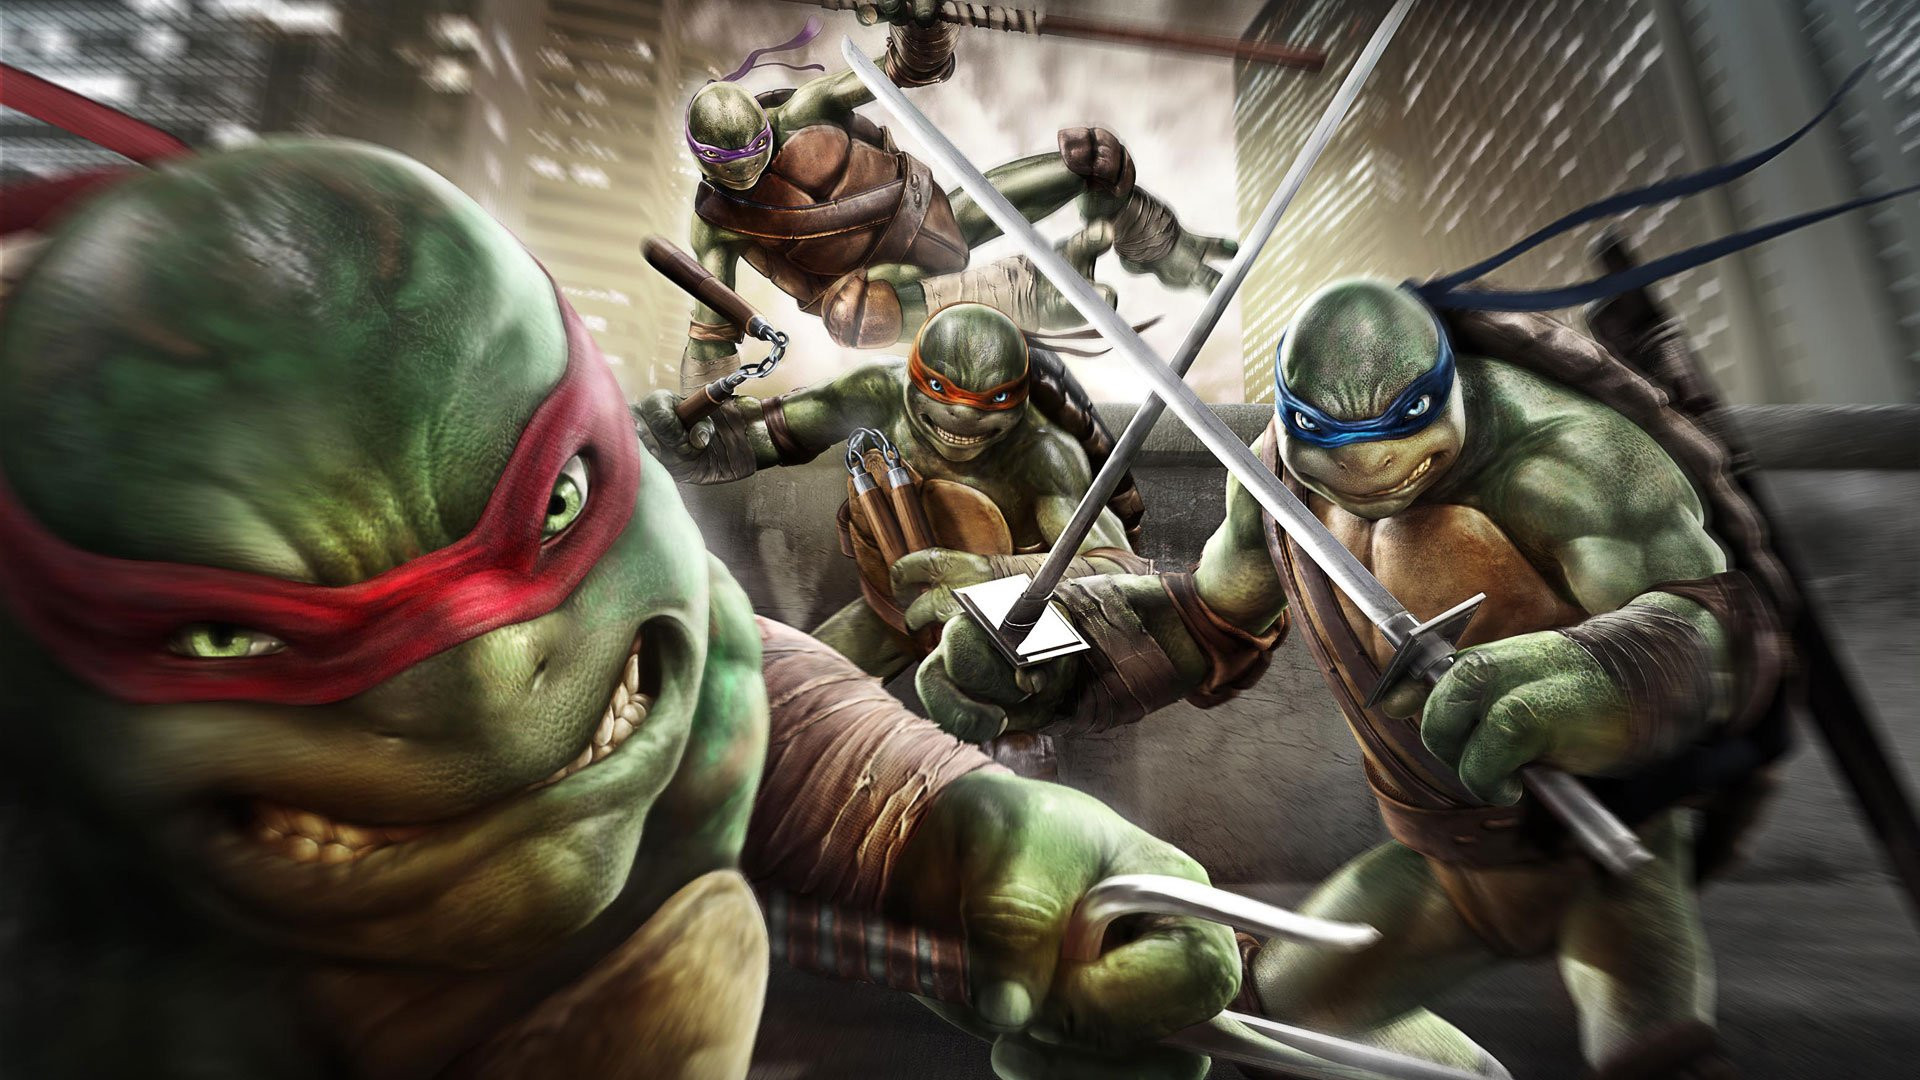 Teenage Mutant Ninja Turtles: Out of the shadows